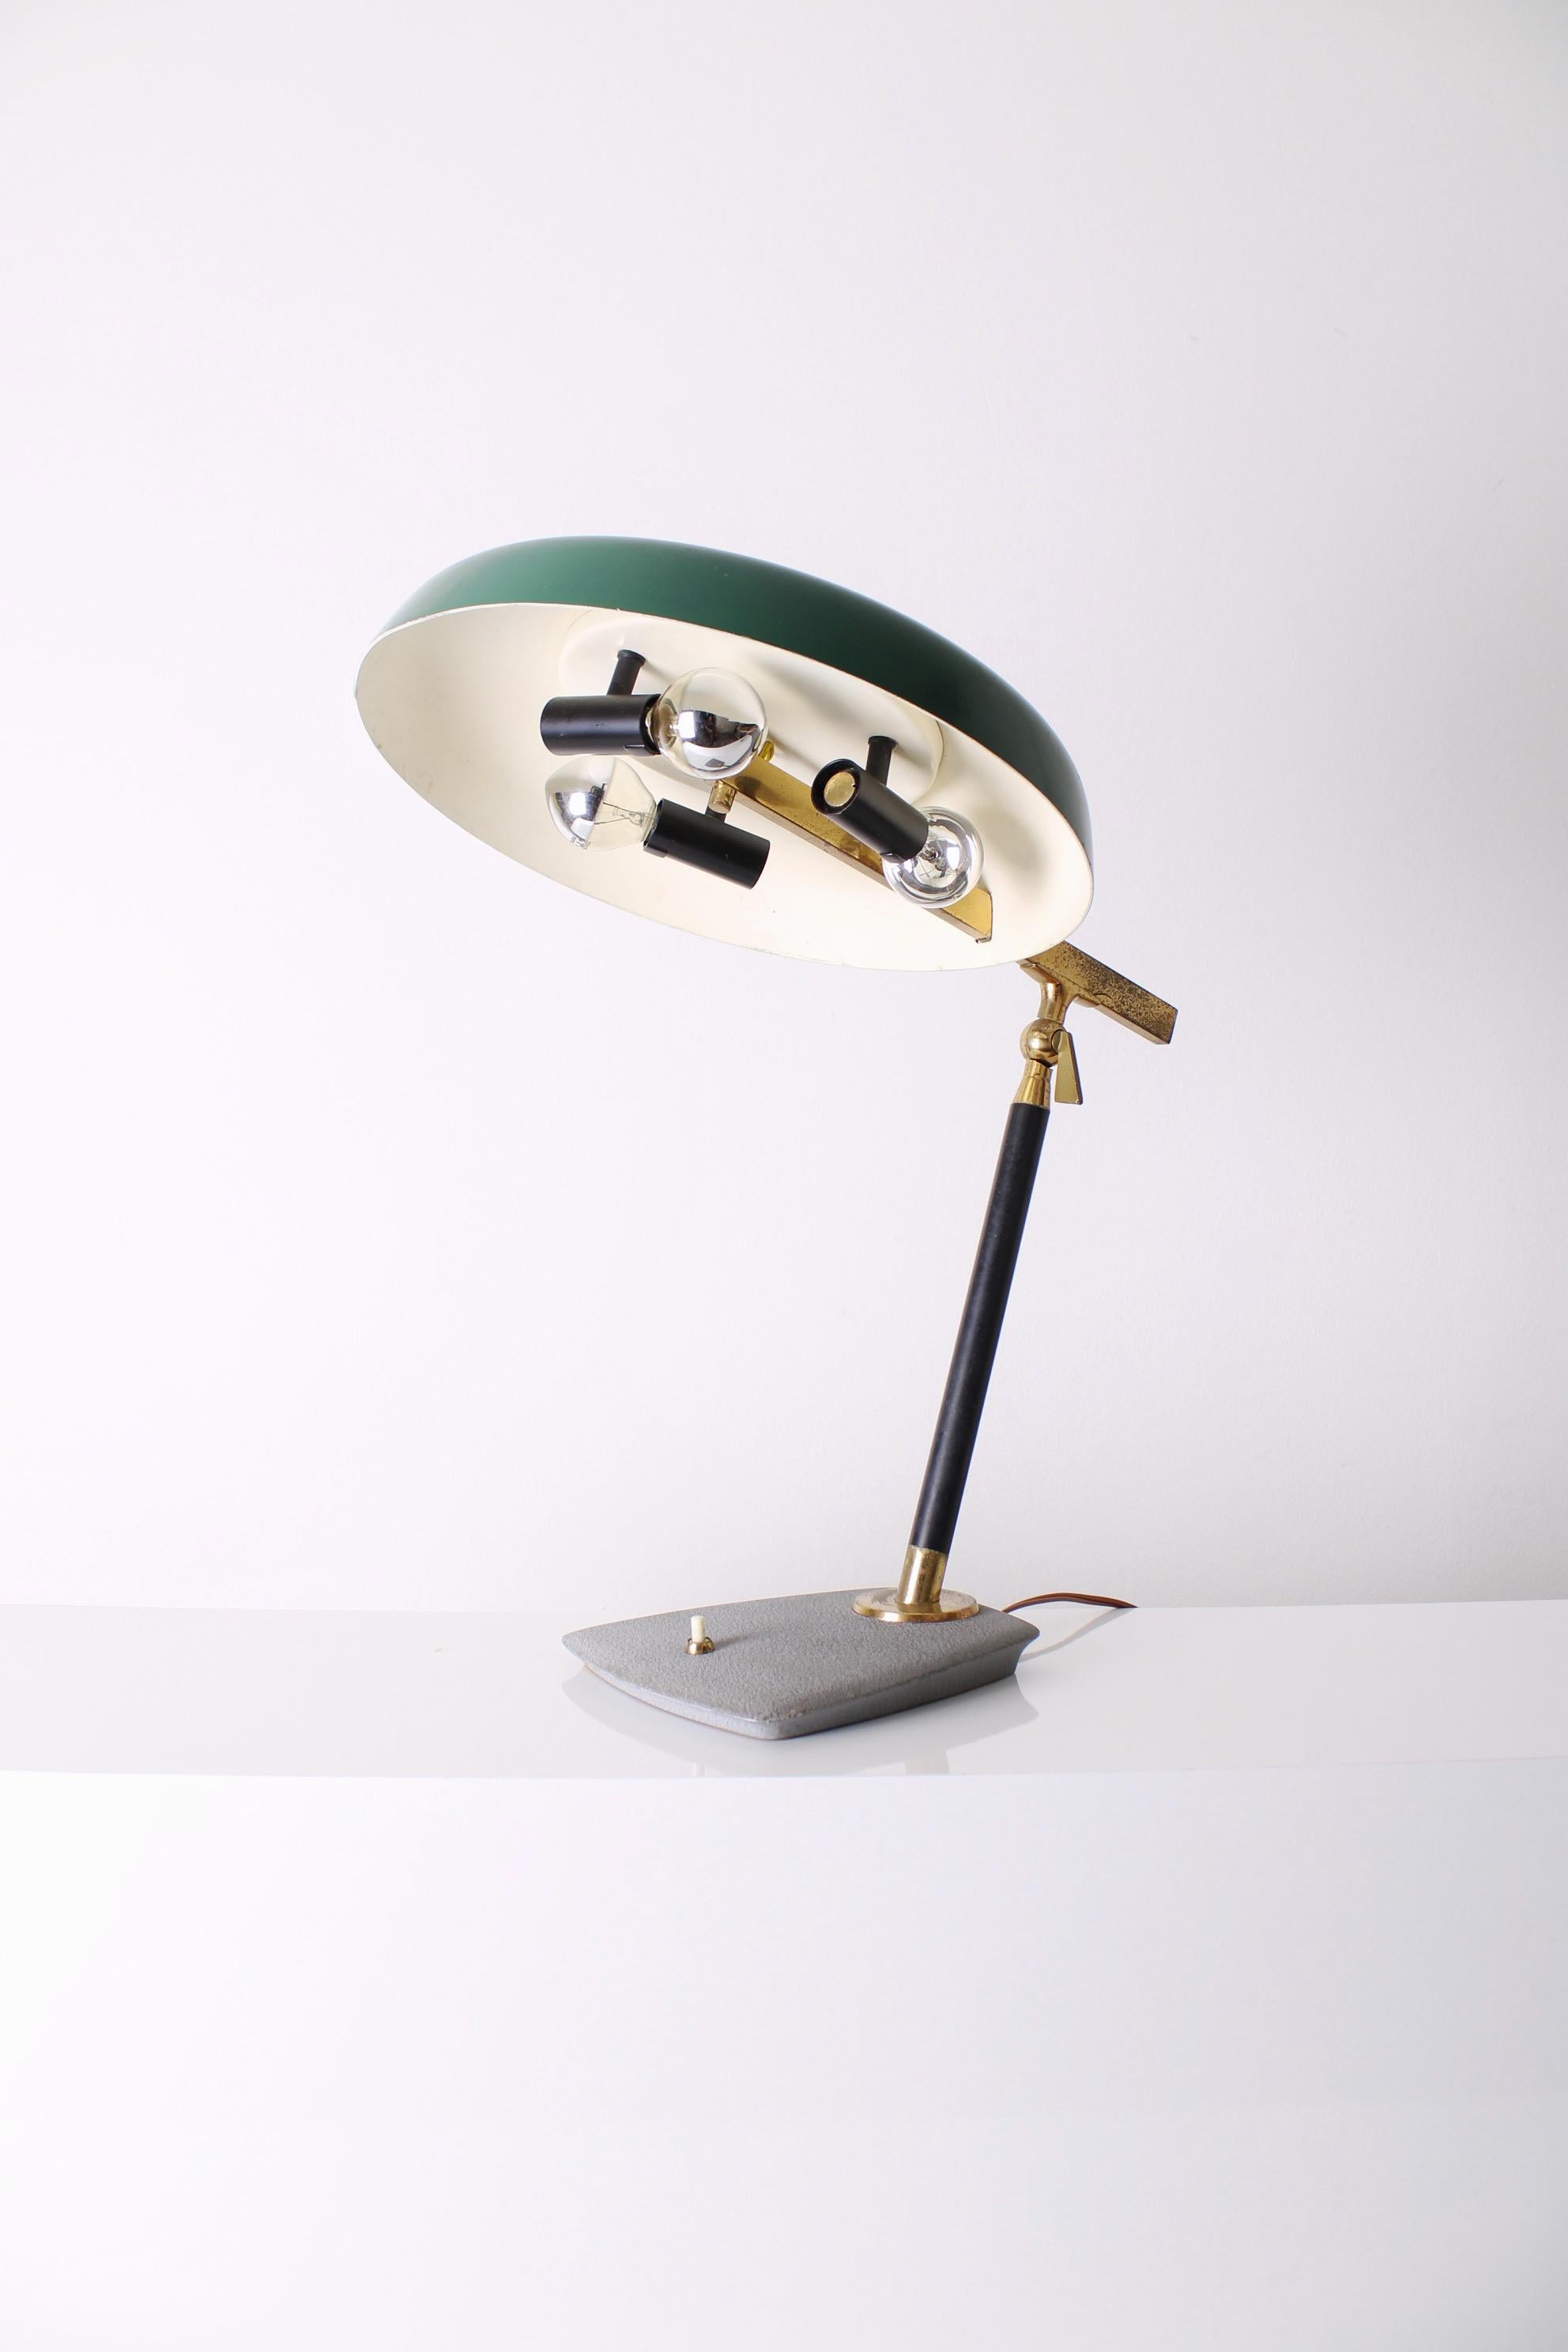 Italian Model 554 desk lamp by Oscar Torlasco for Lumi, 1963